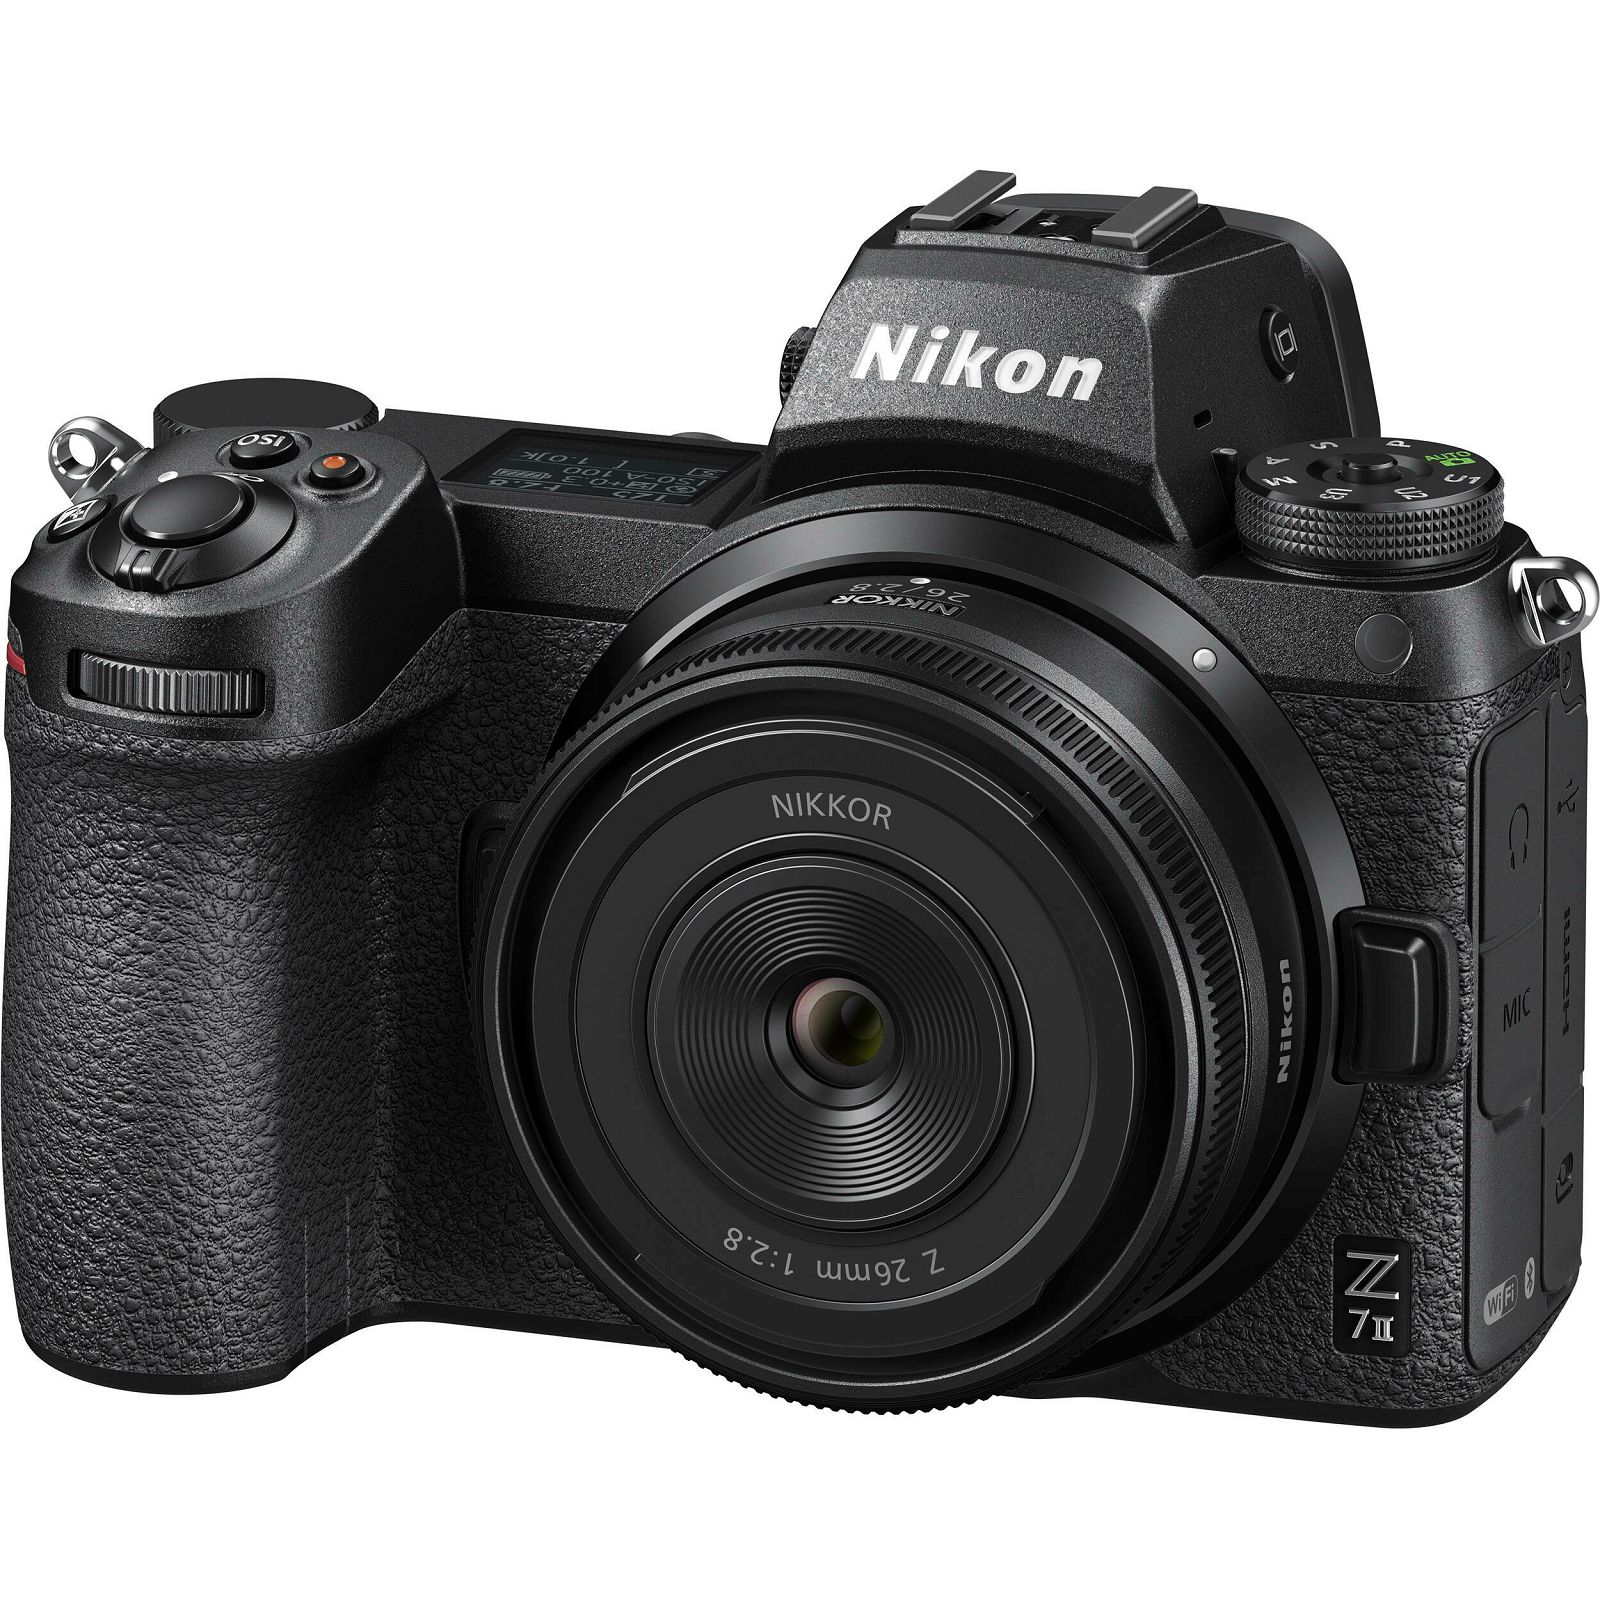 Nikon Z 26mm f/2.8 širokokutni objektiv (JMA108DA)